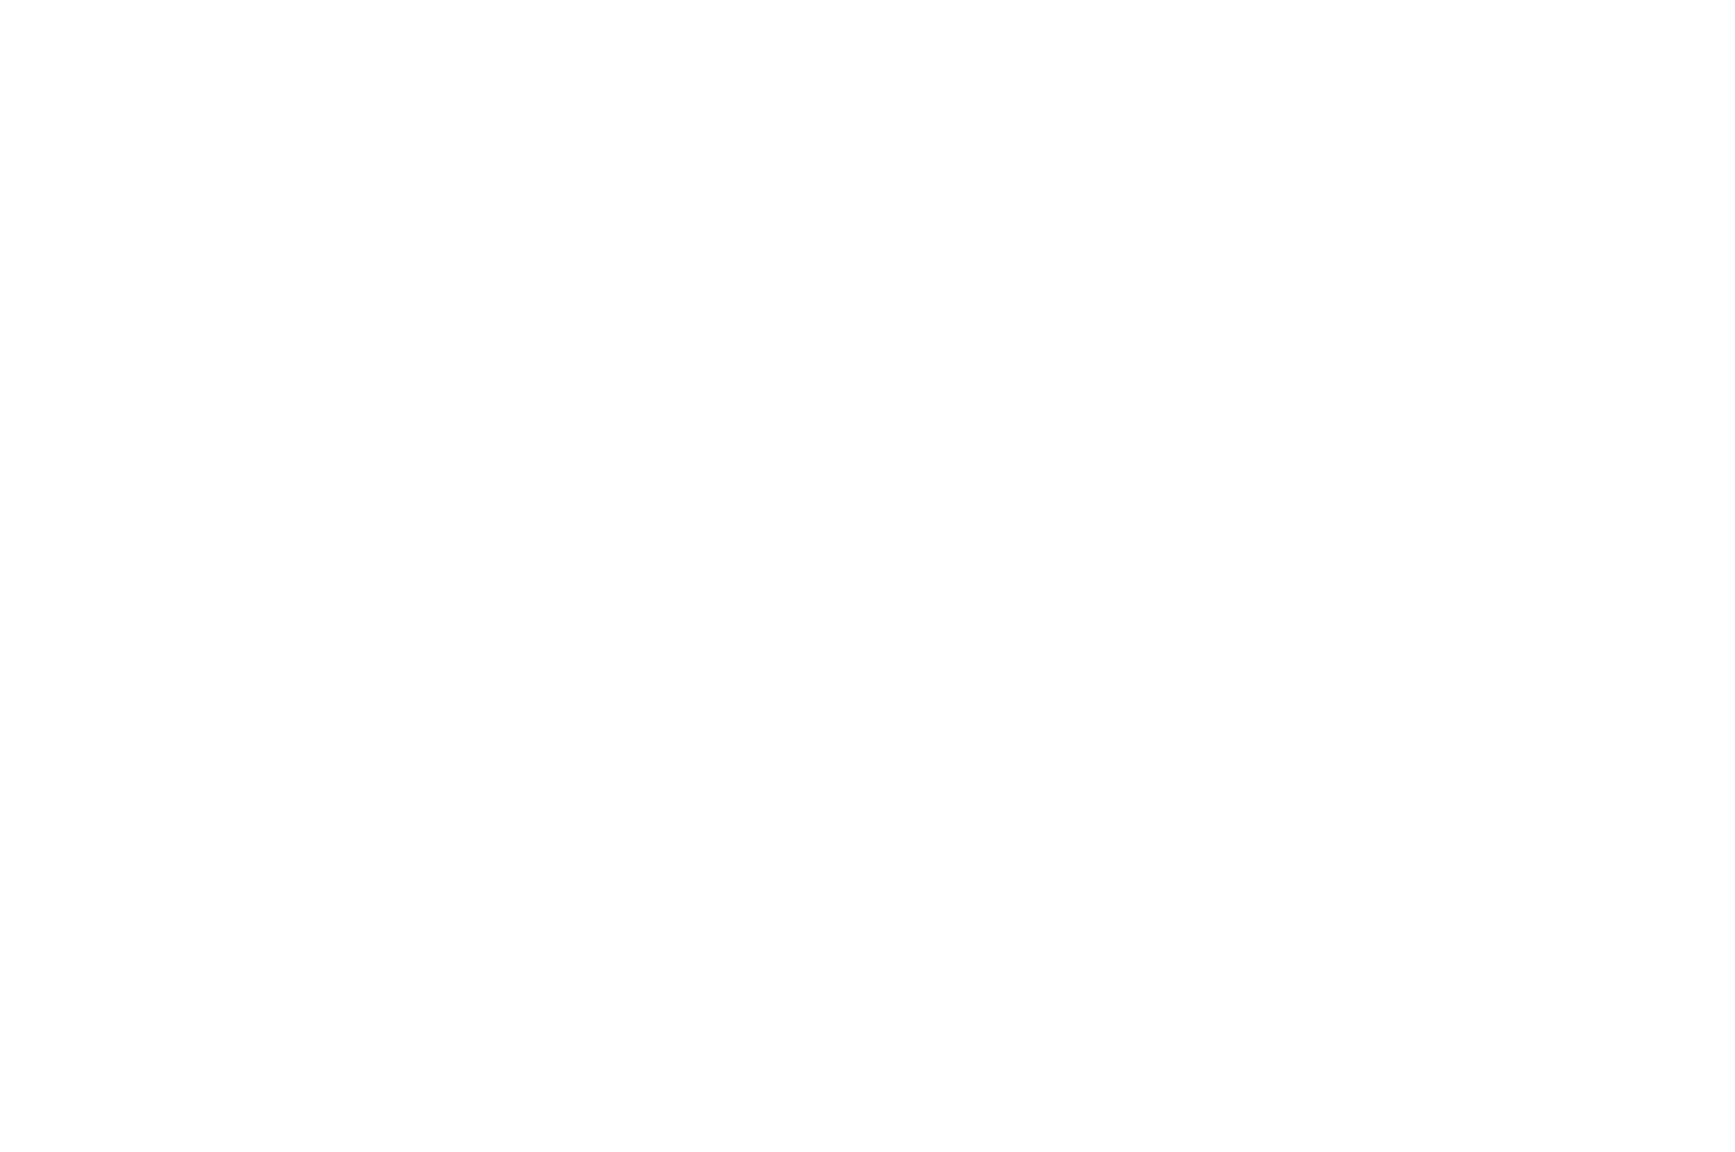 BEST DOCUMENTARY - Los Angeles Film Awards - 2021 (1)